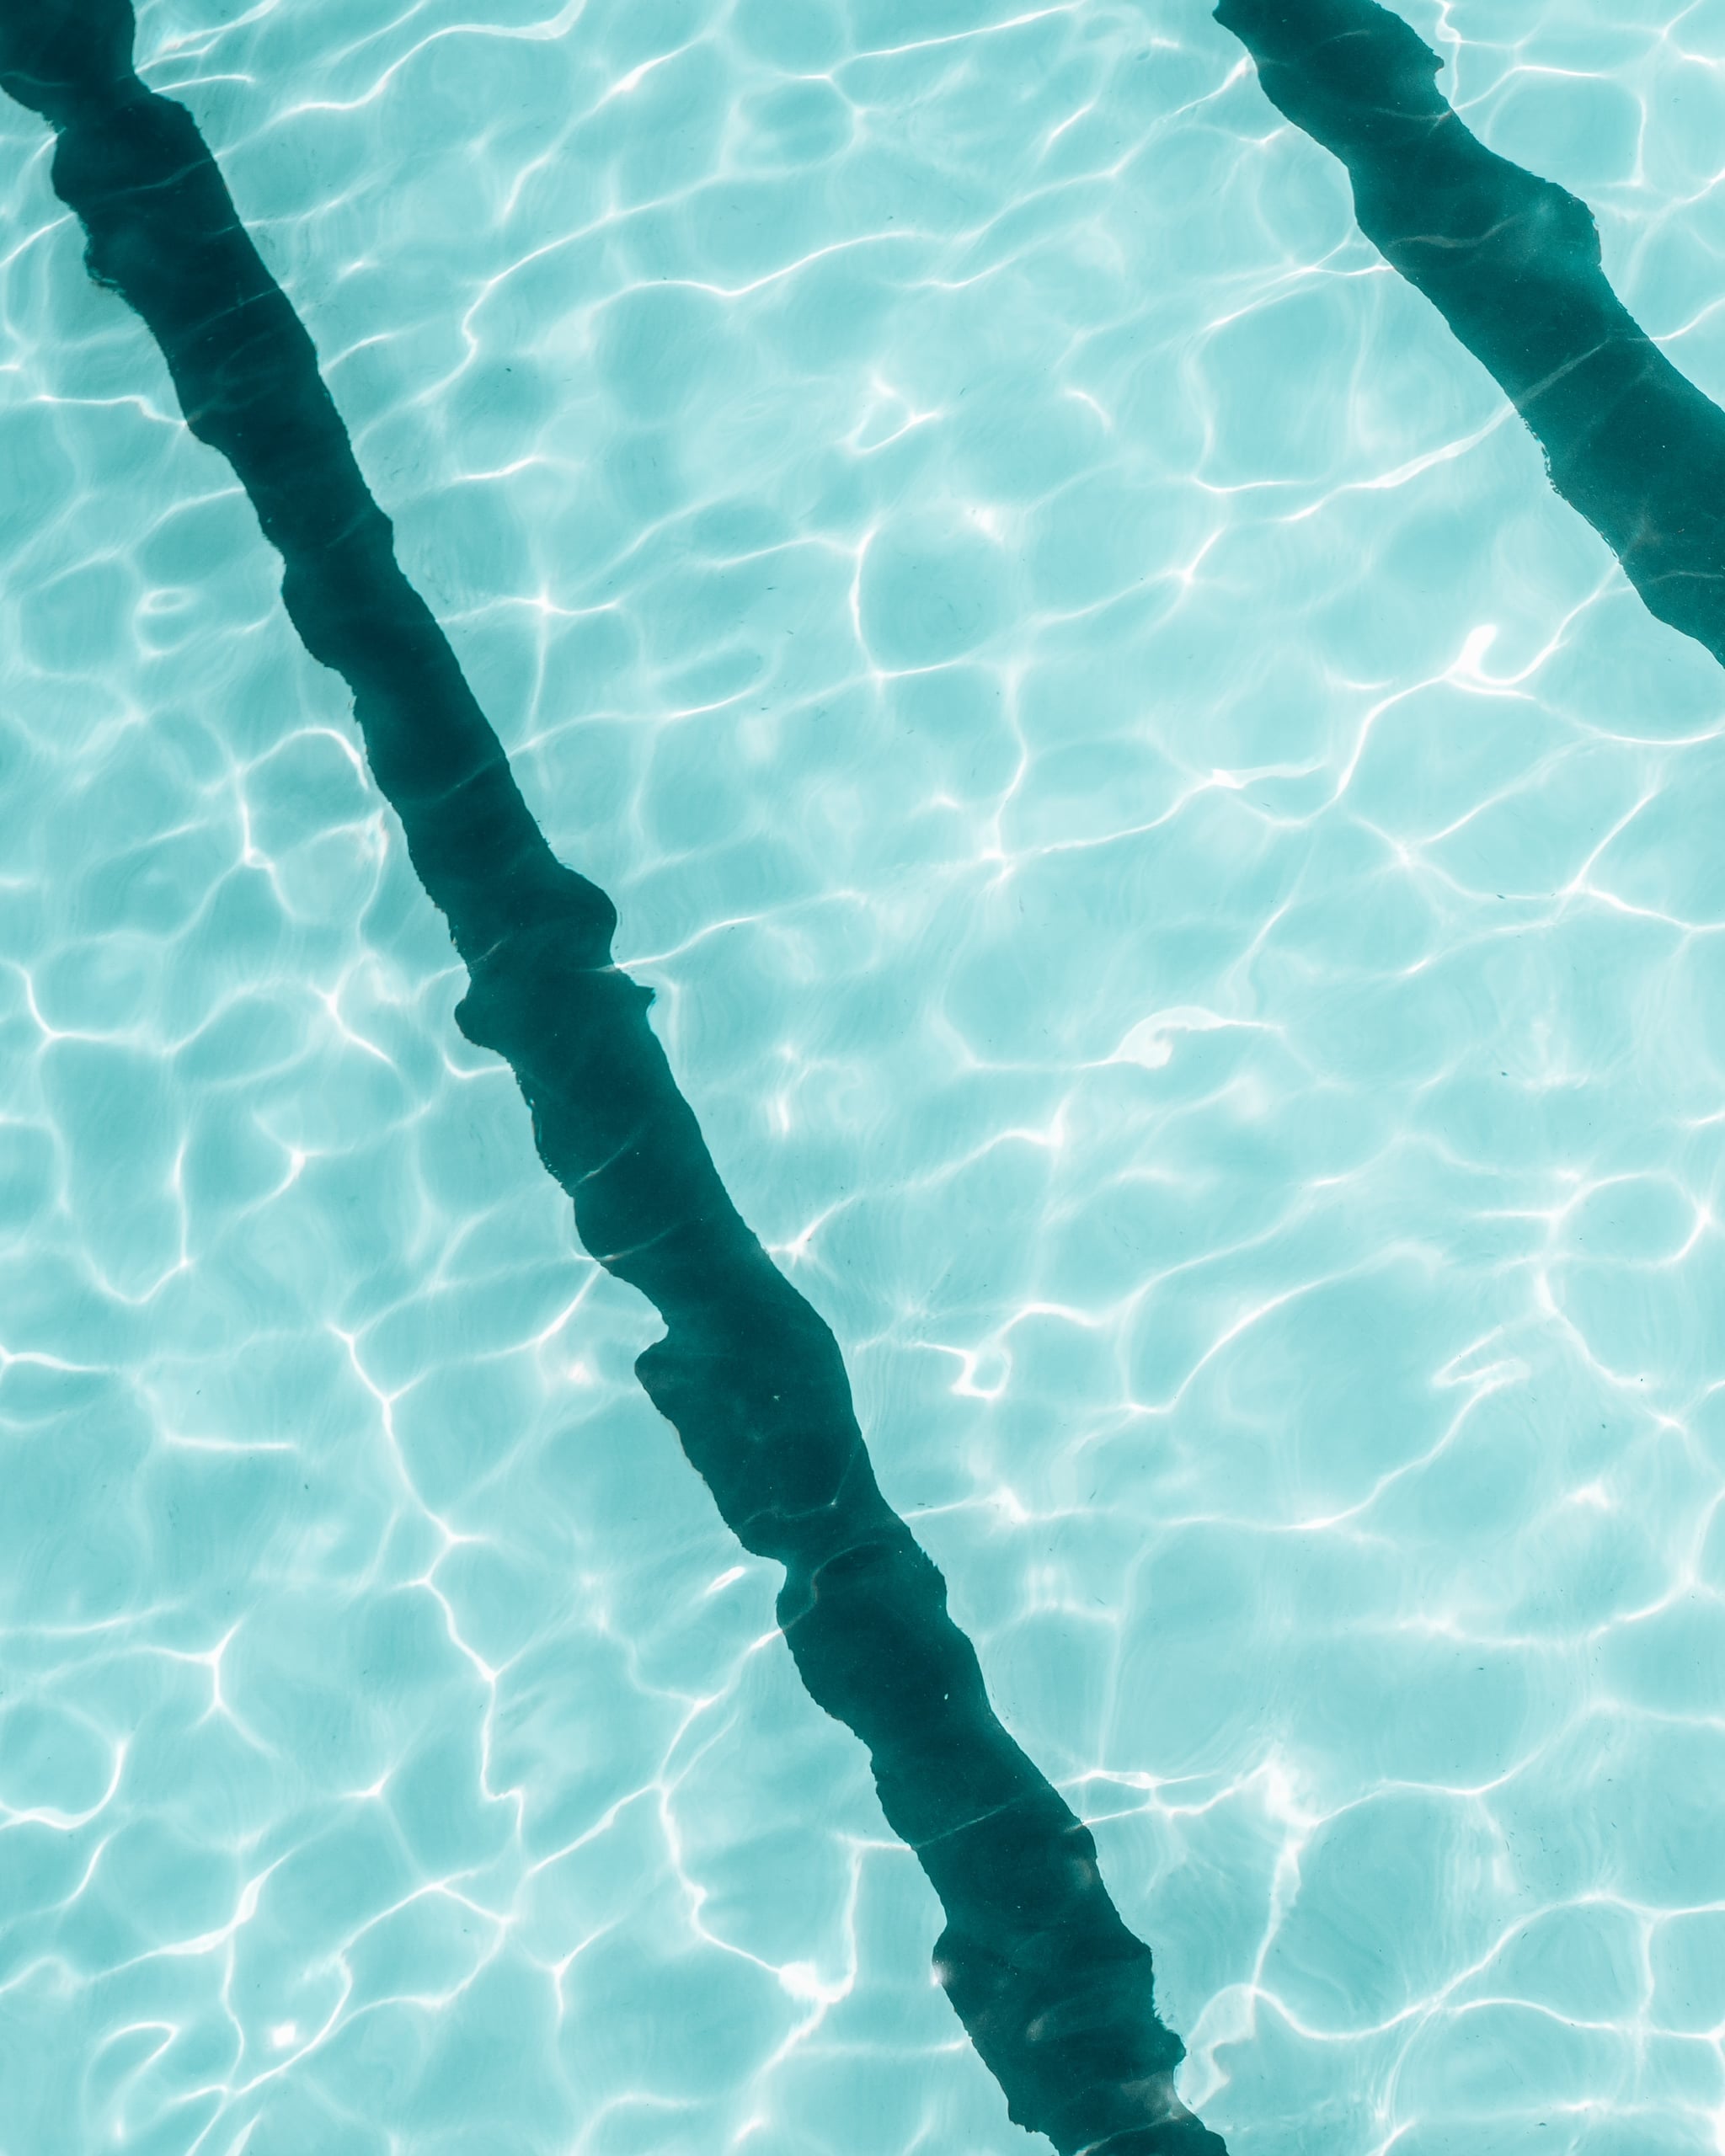 Wallpaper girl pool water bikini images for desktop section праздники   download